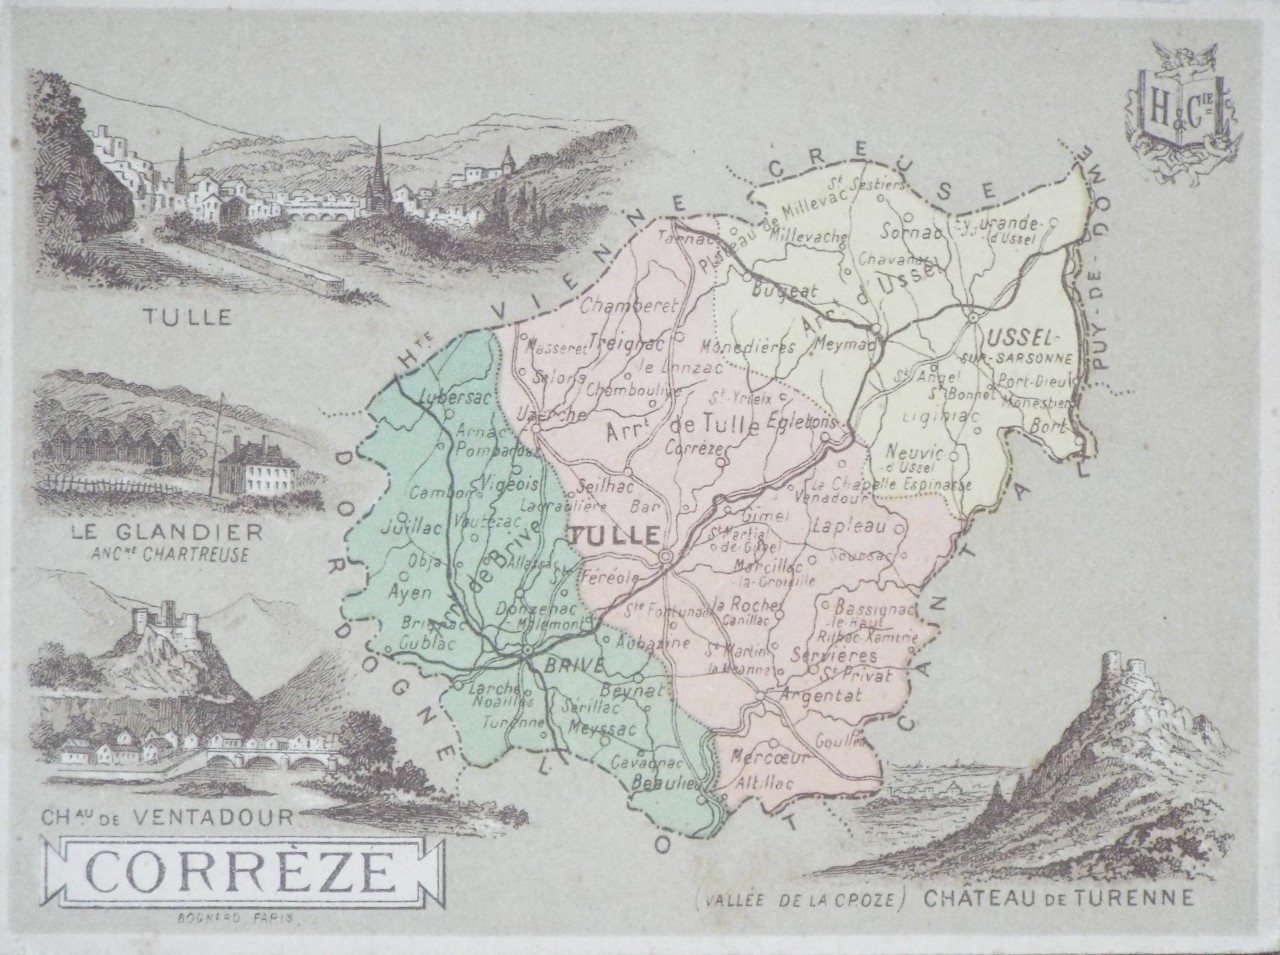 Map of Correze